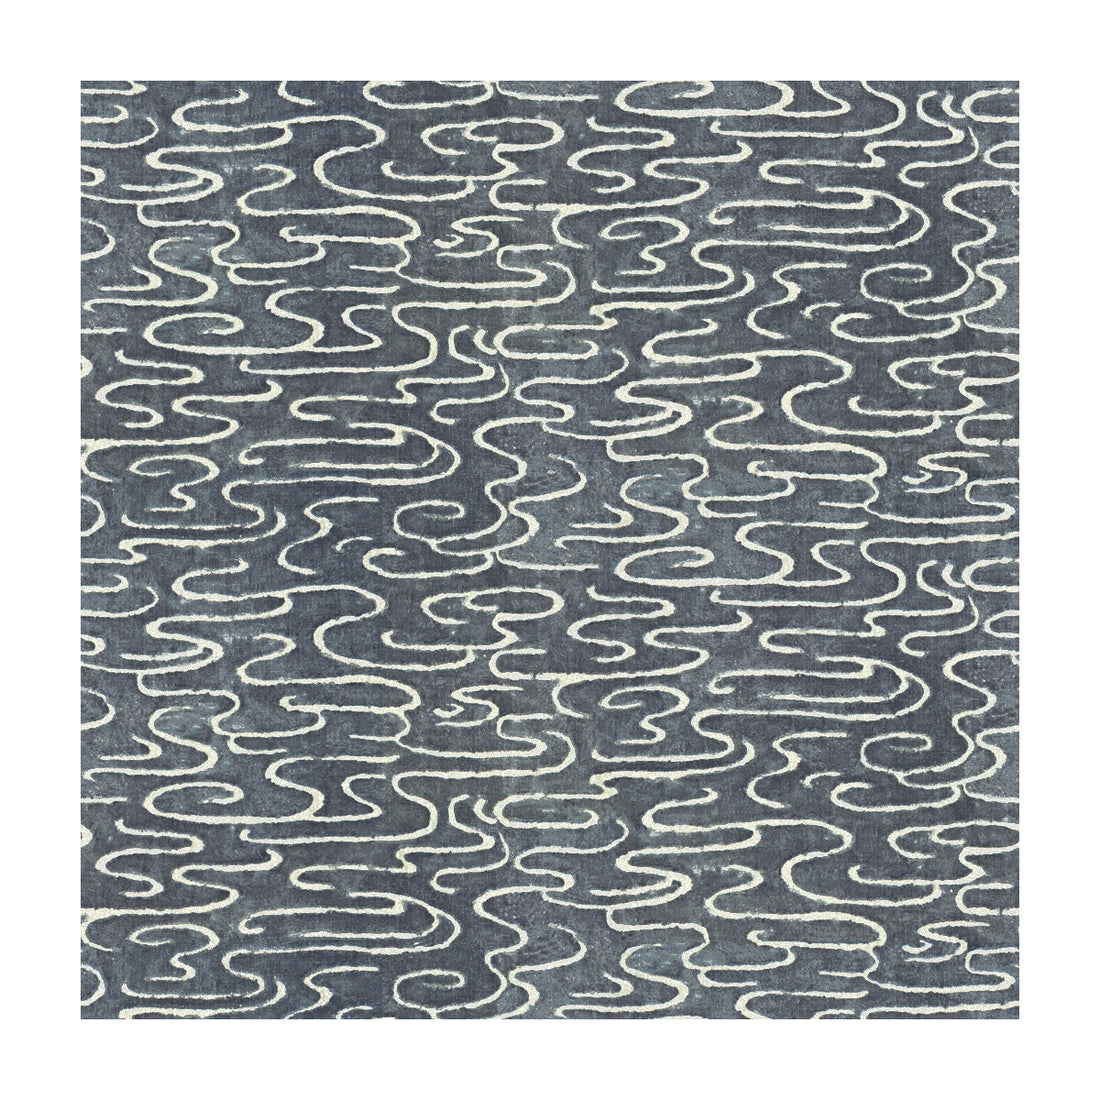 Sandtropez fabric in indigo color - pattern SANDTROPEZ.511.0 - by Kravet Couture in the Linherr Hollingsworth Boheme collection